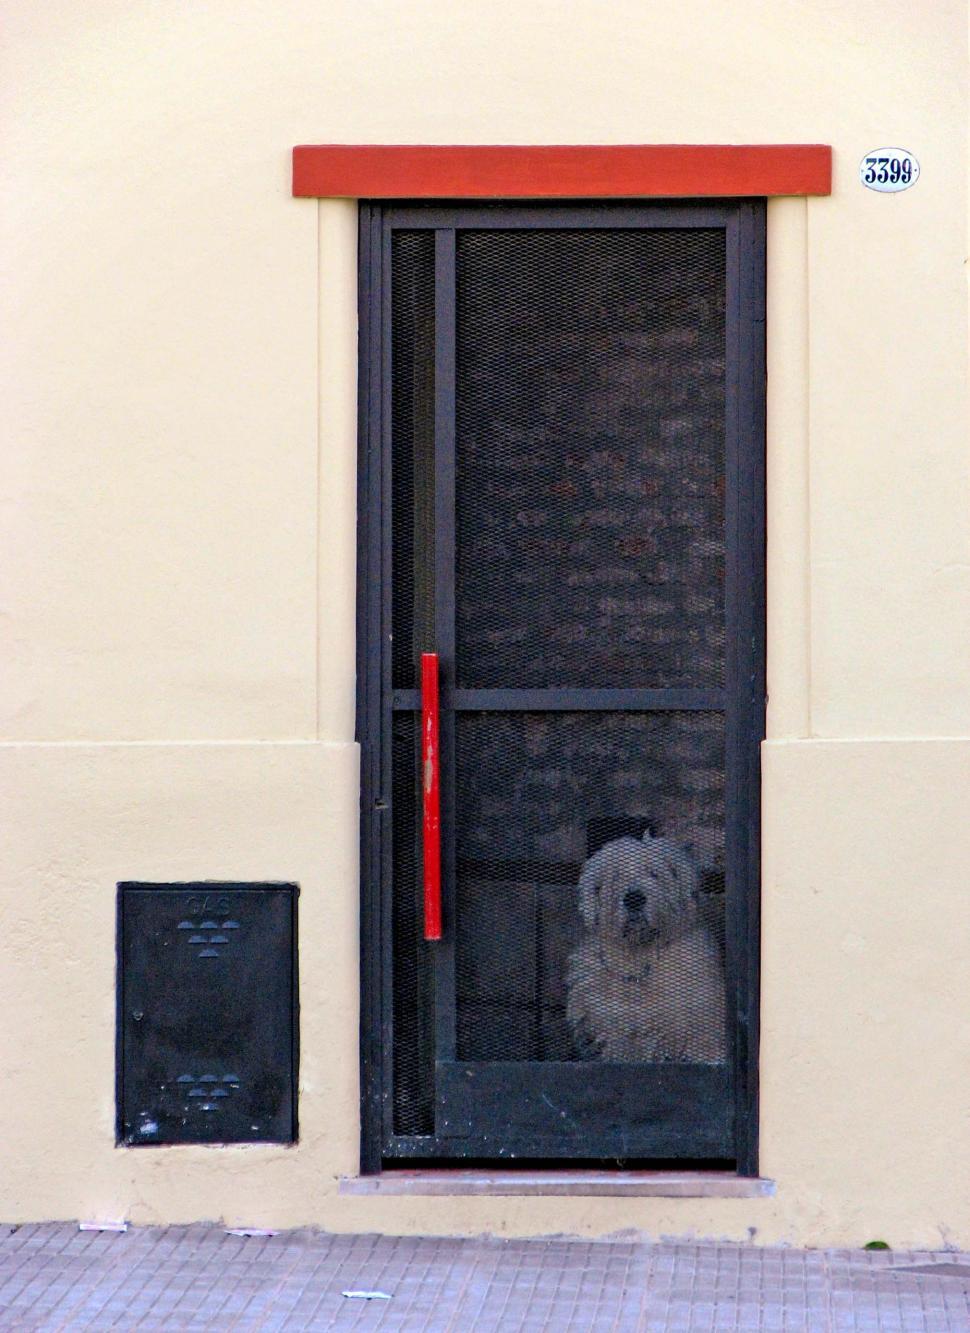 Free Image of Closed Dog 